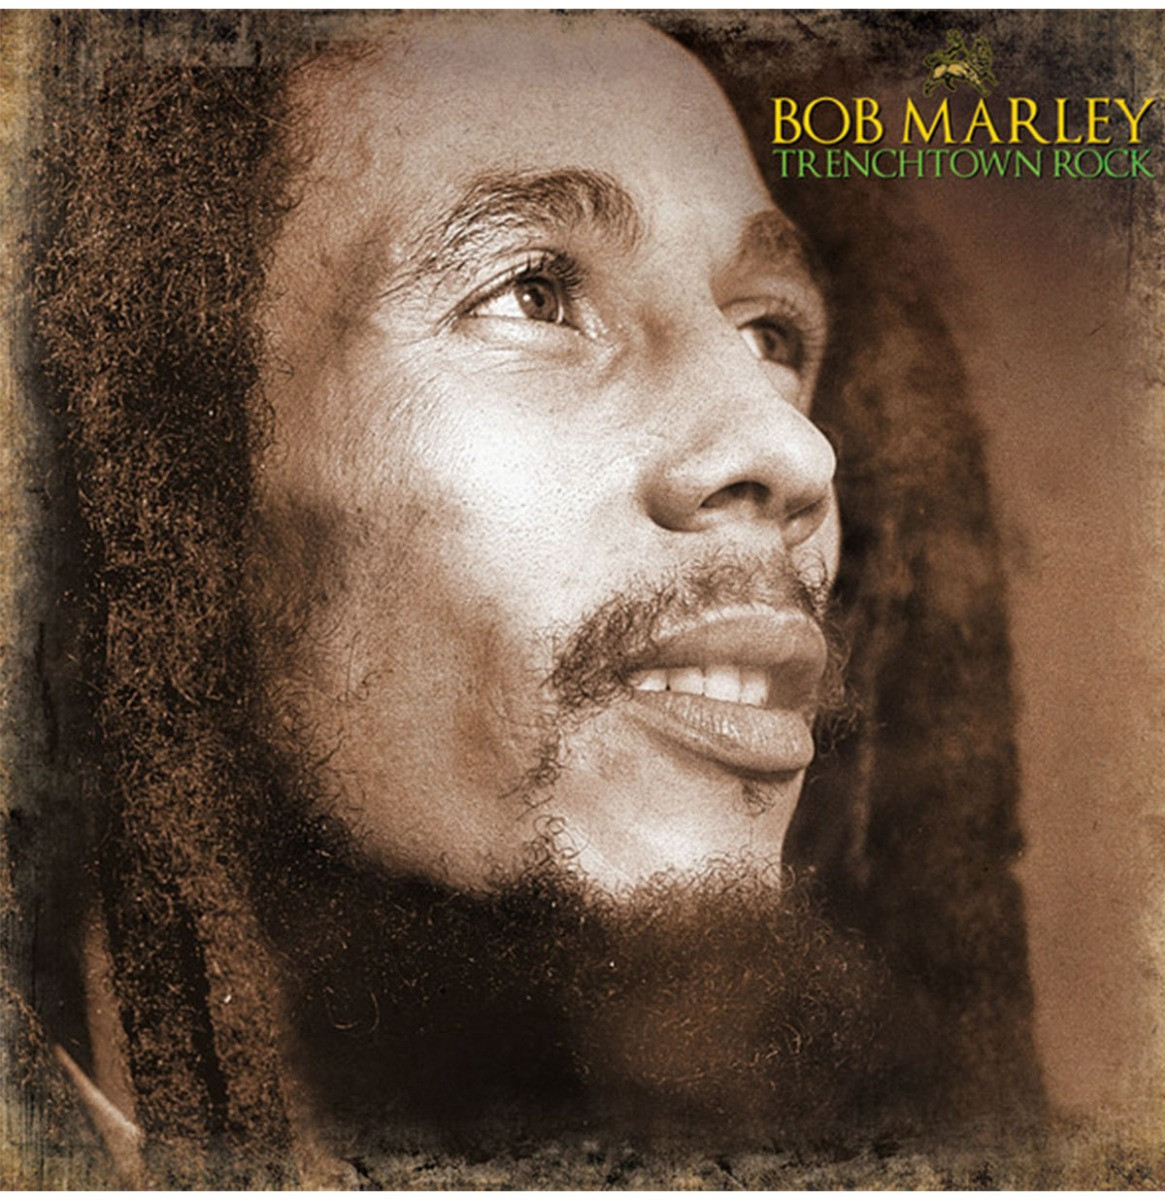 Bob Marley - Trenchtown Rock 2LP